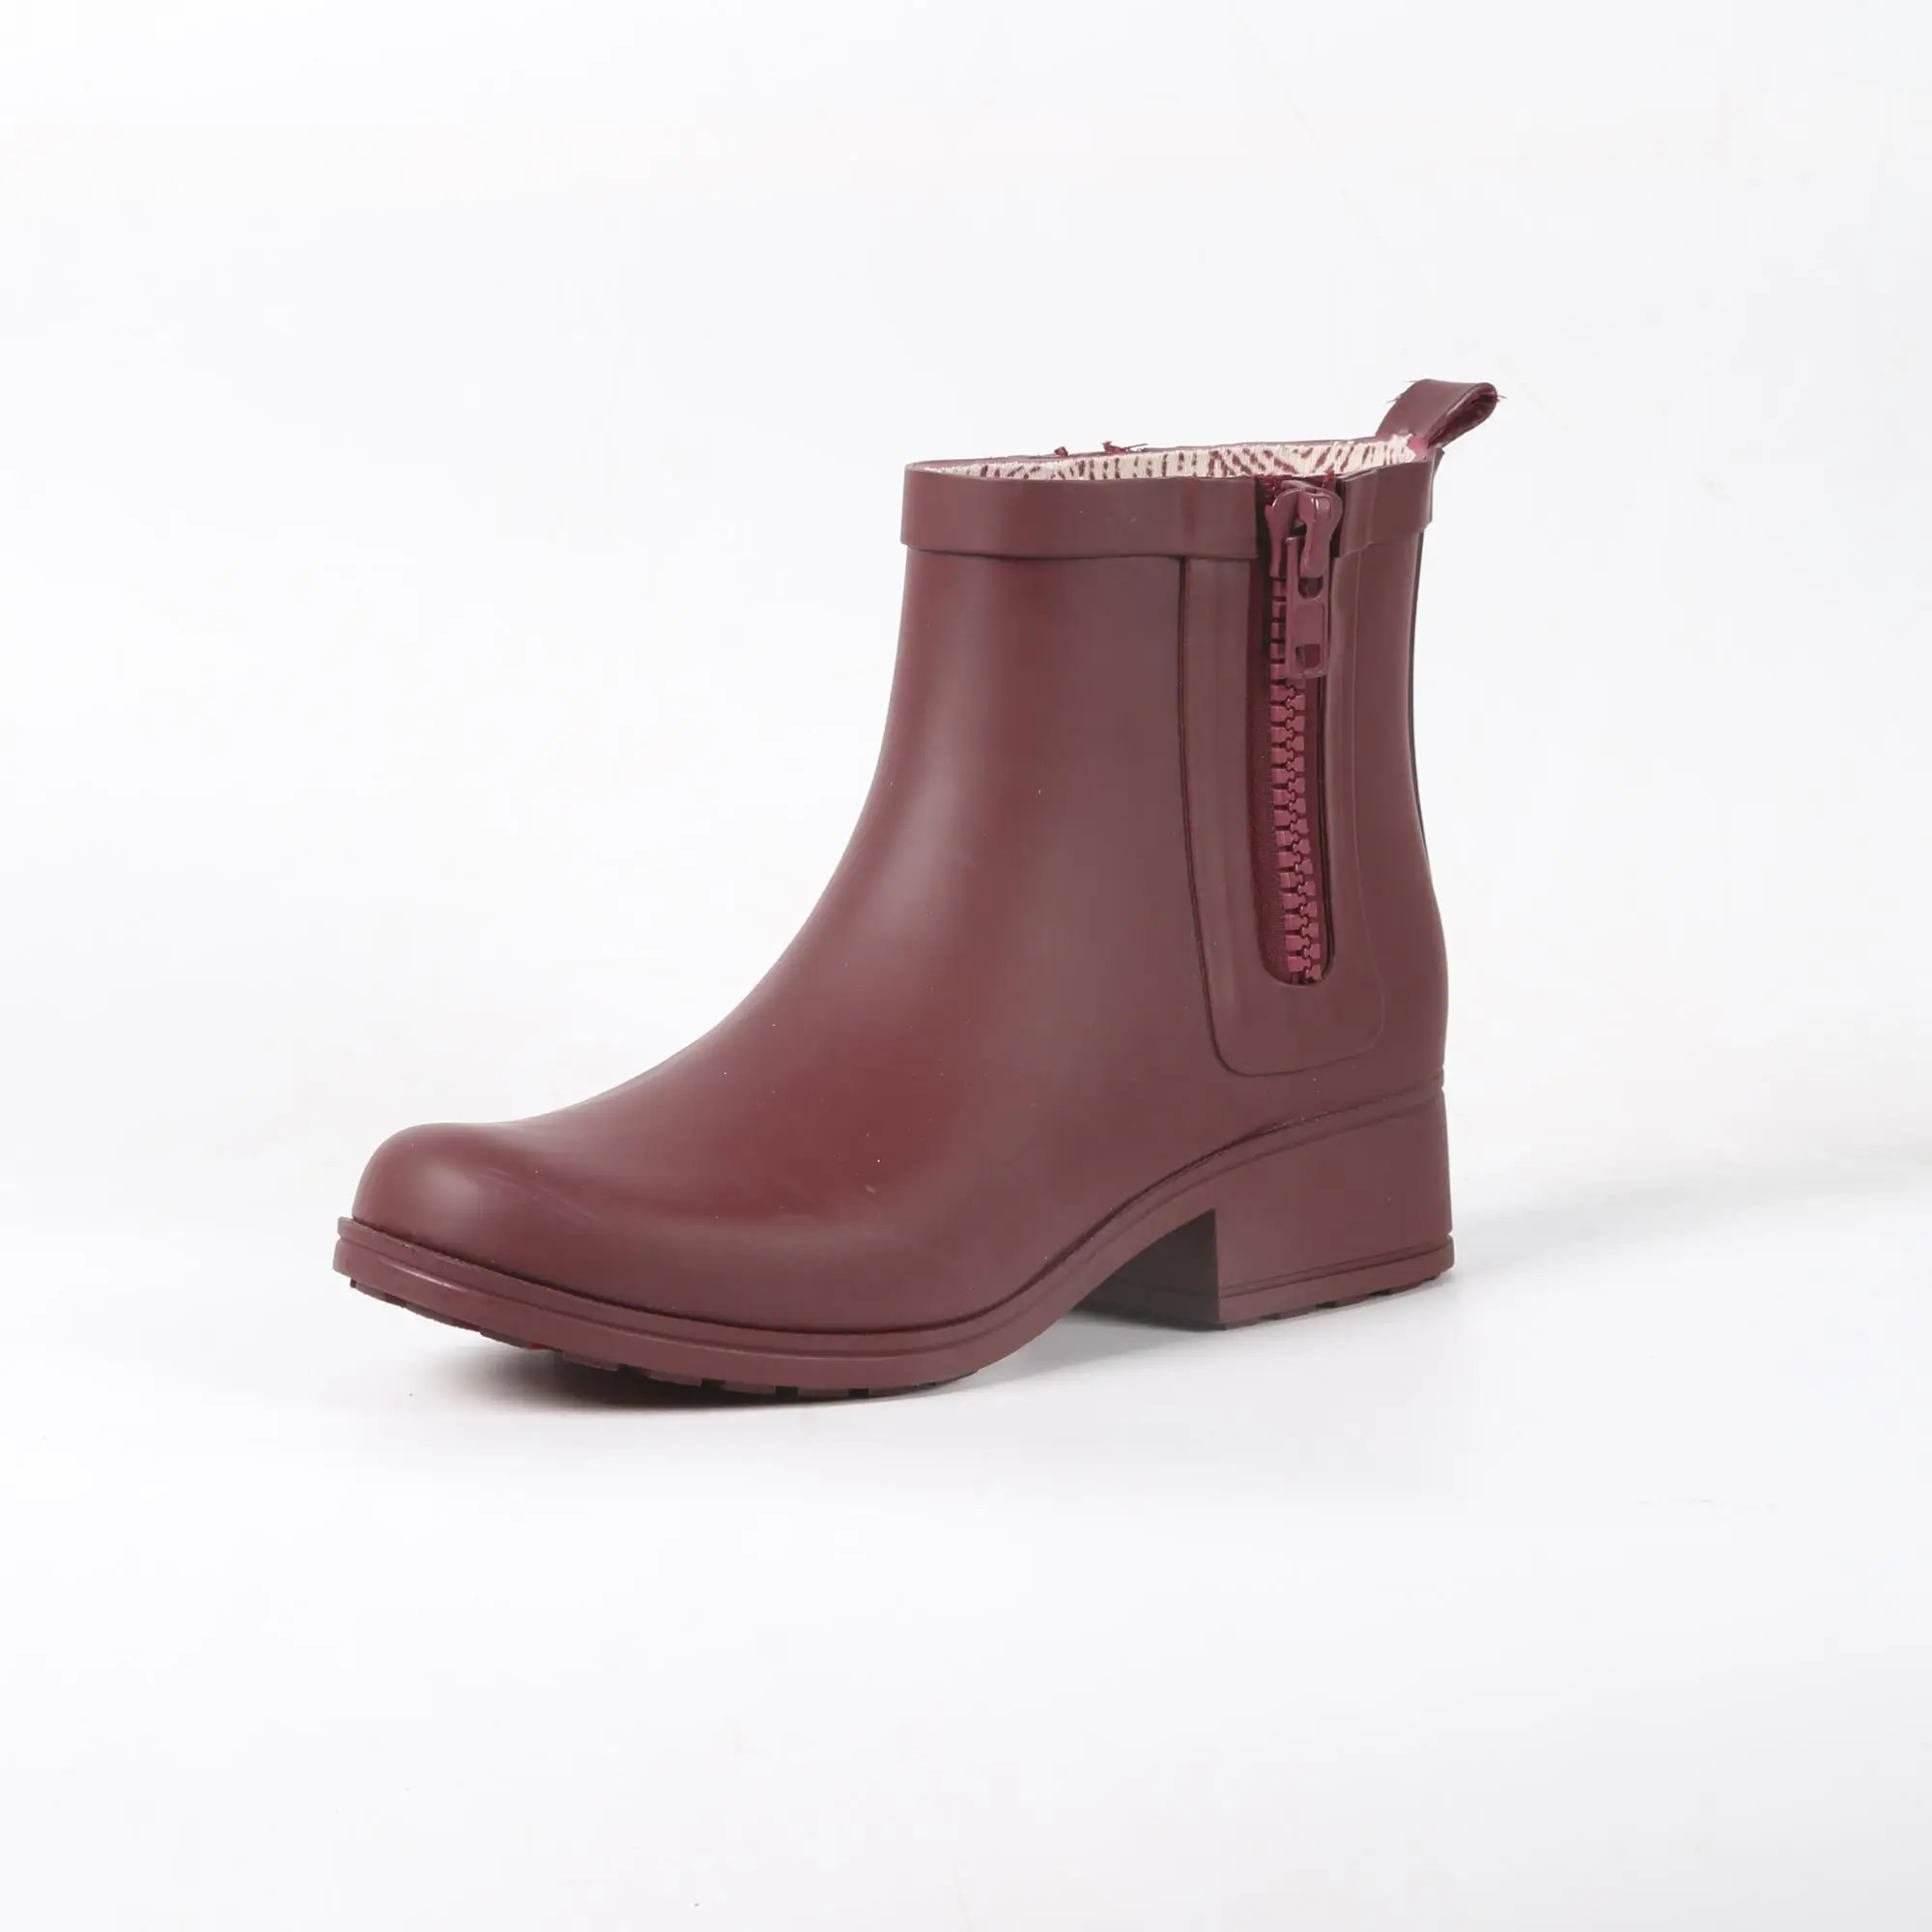 rain boots ladies